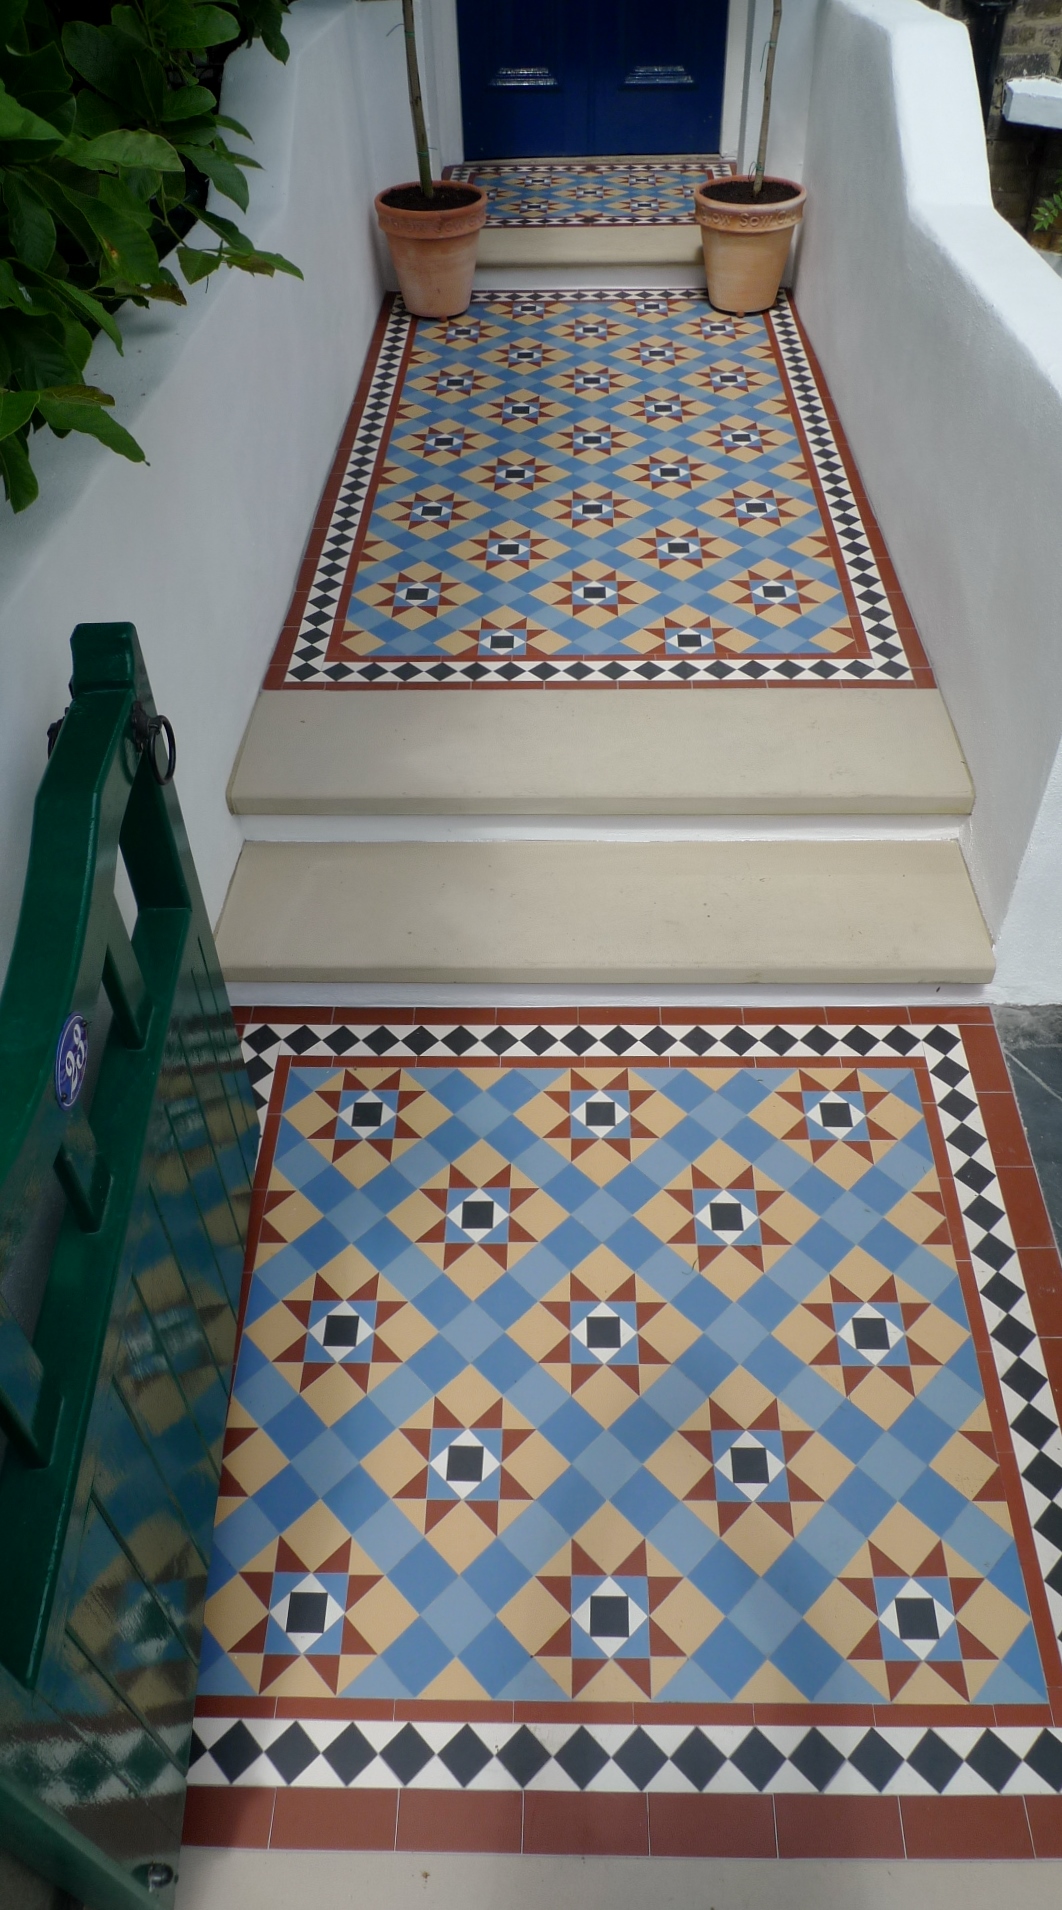 victorian mosaic garden tile path yorkstone steps black heath greenwich london# (6)